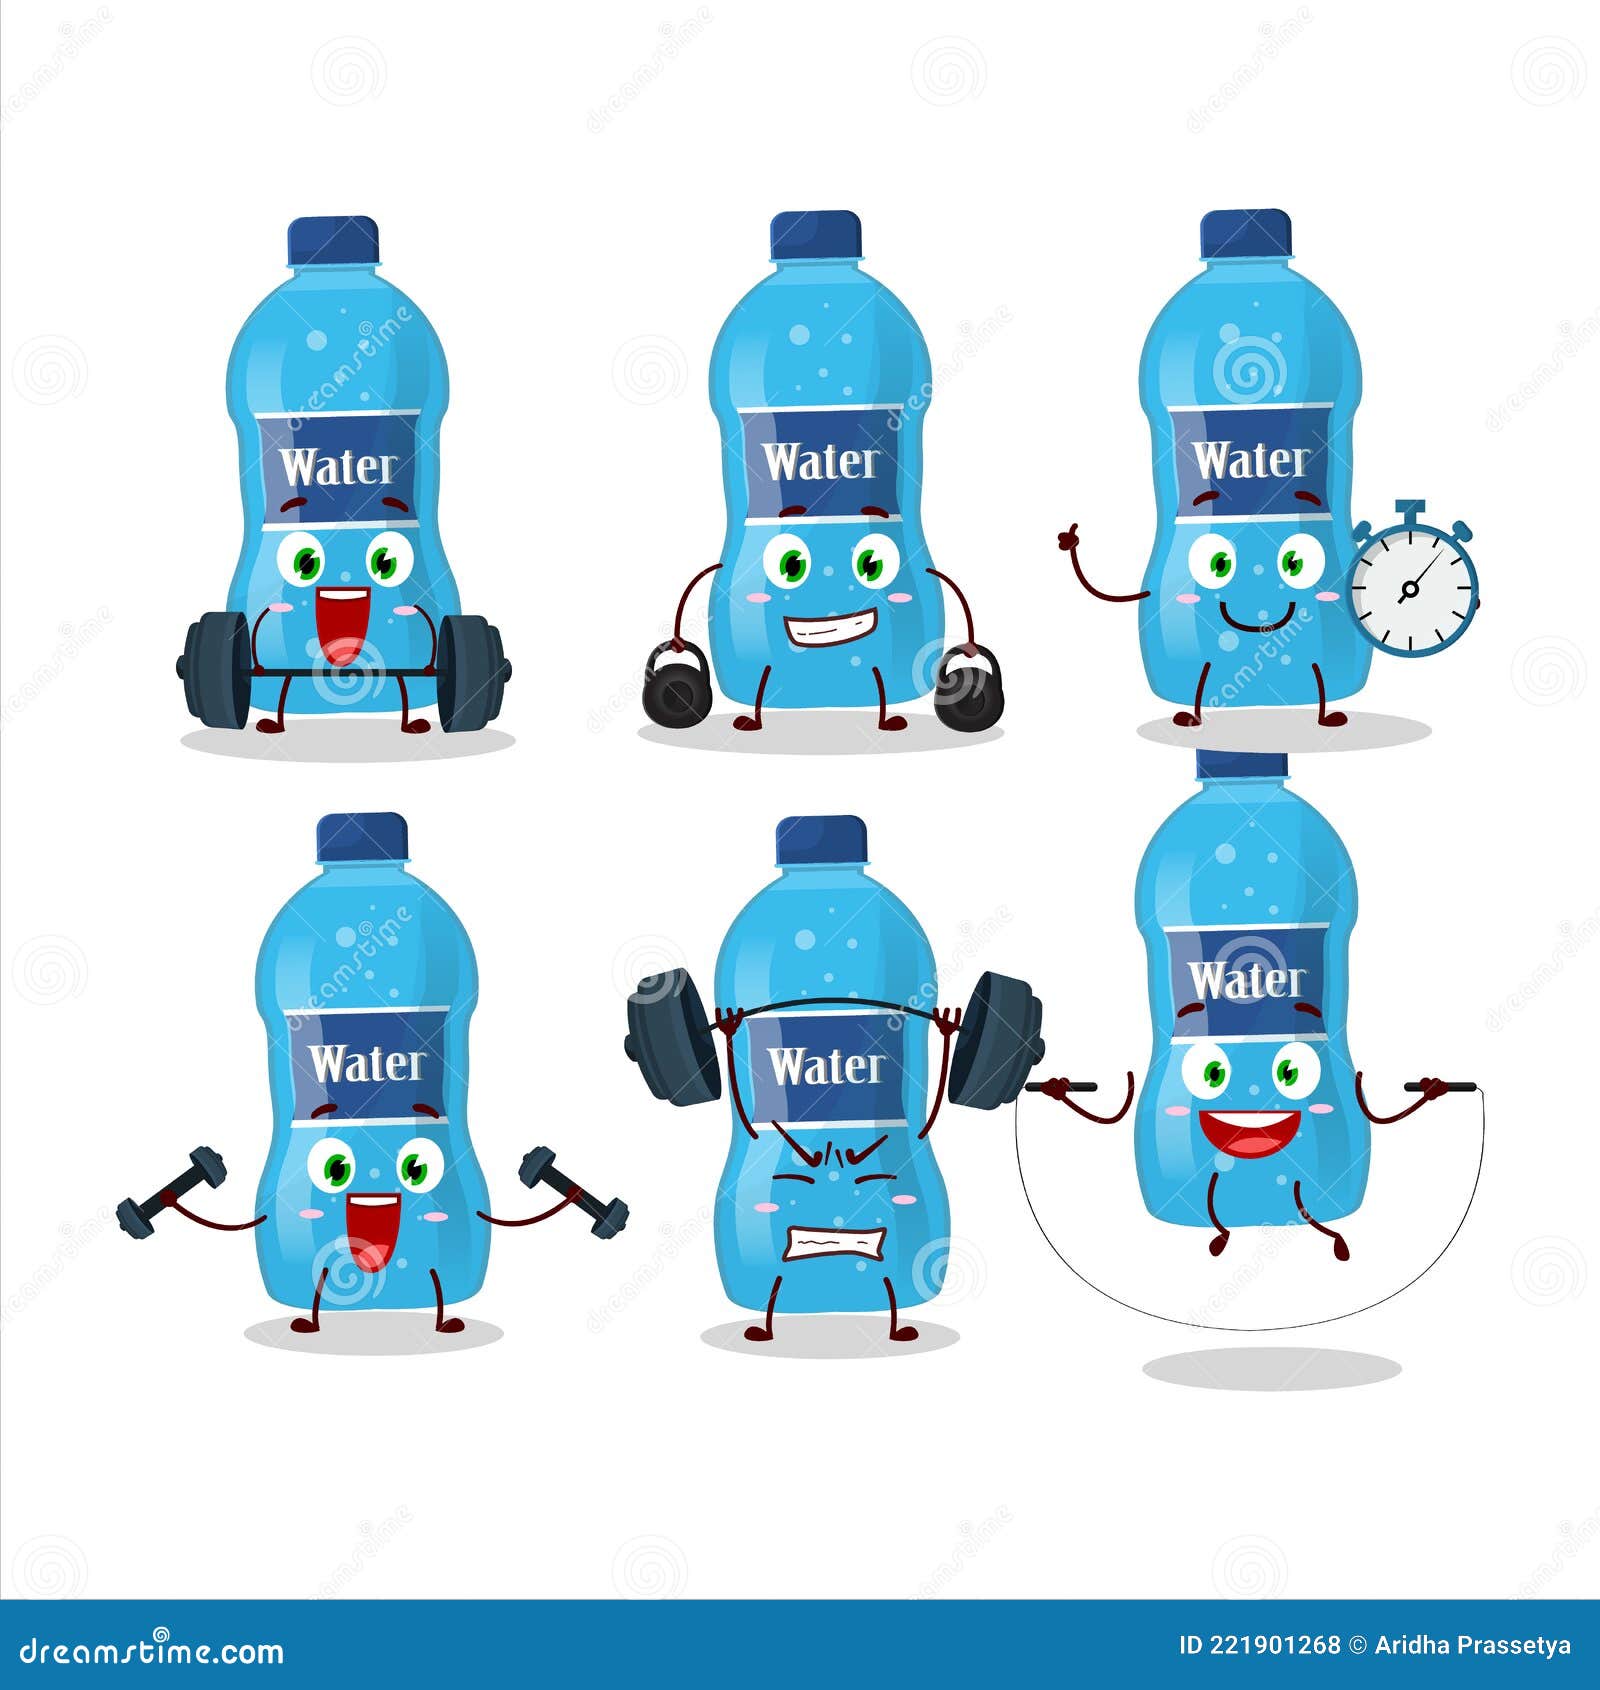 Botella de agua ilustración de dibujos animados vector plano